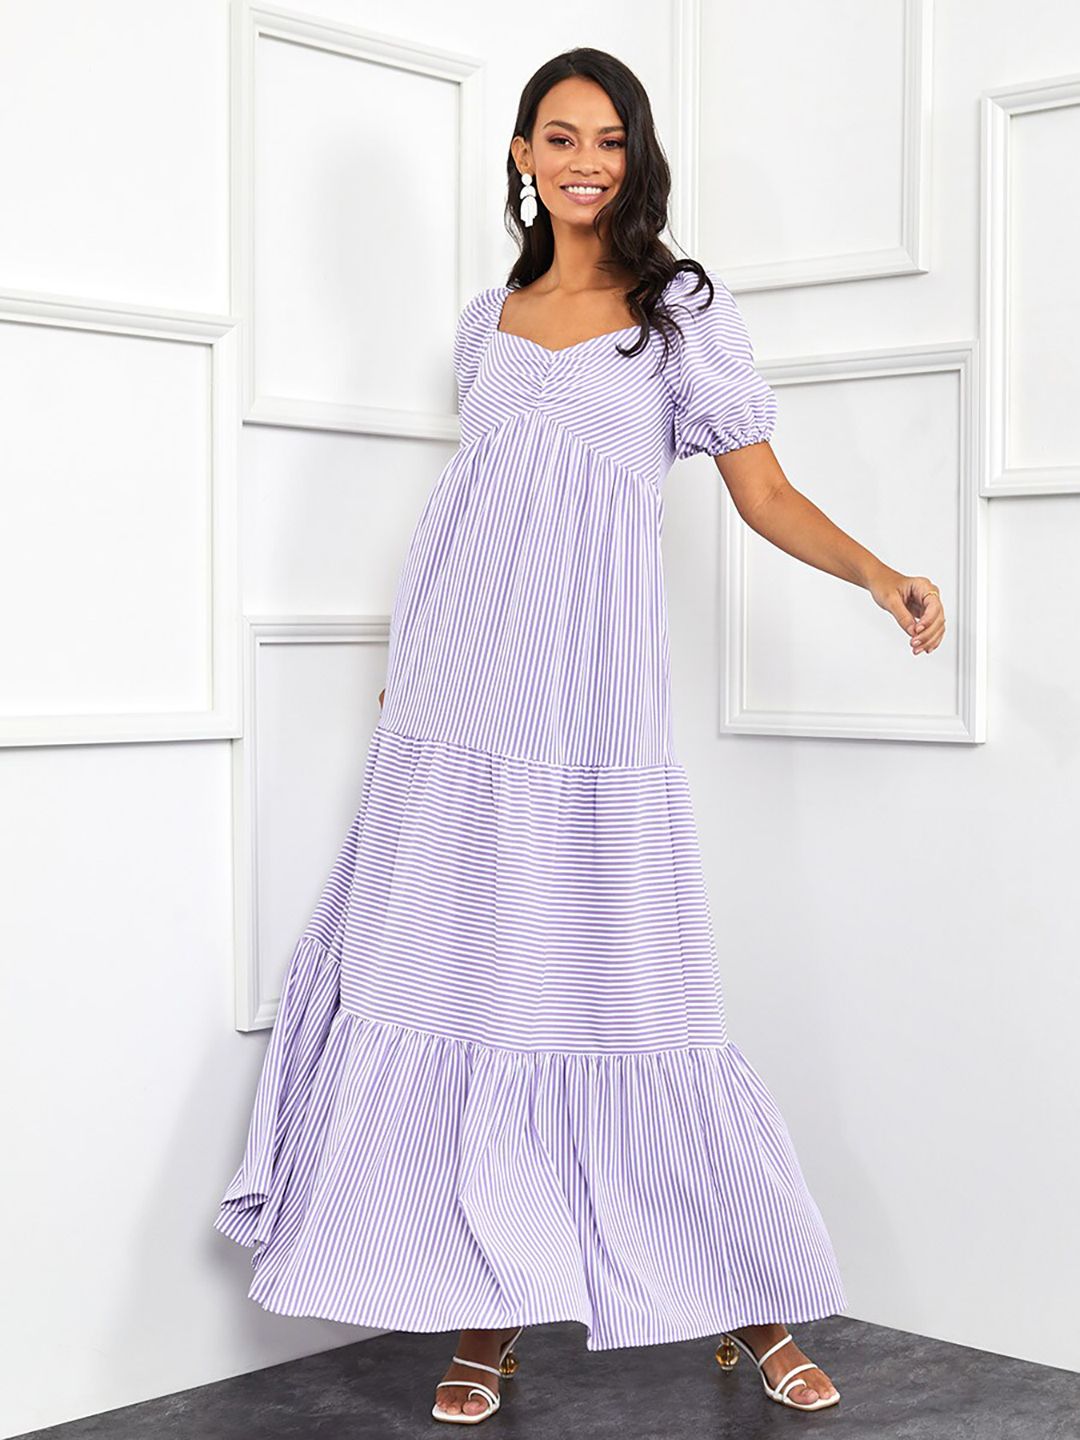 Styli Lavender Striped Maxi Dress Price in India